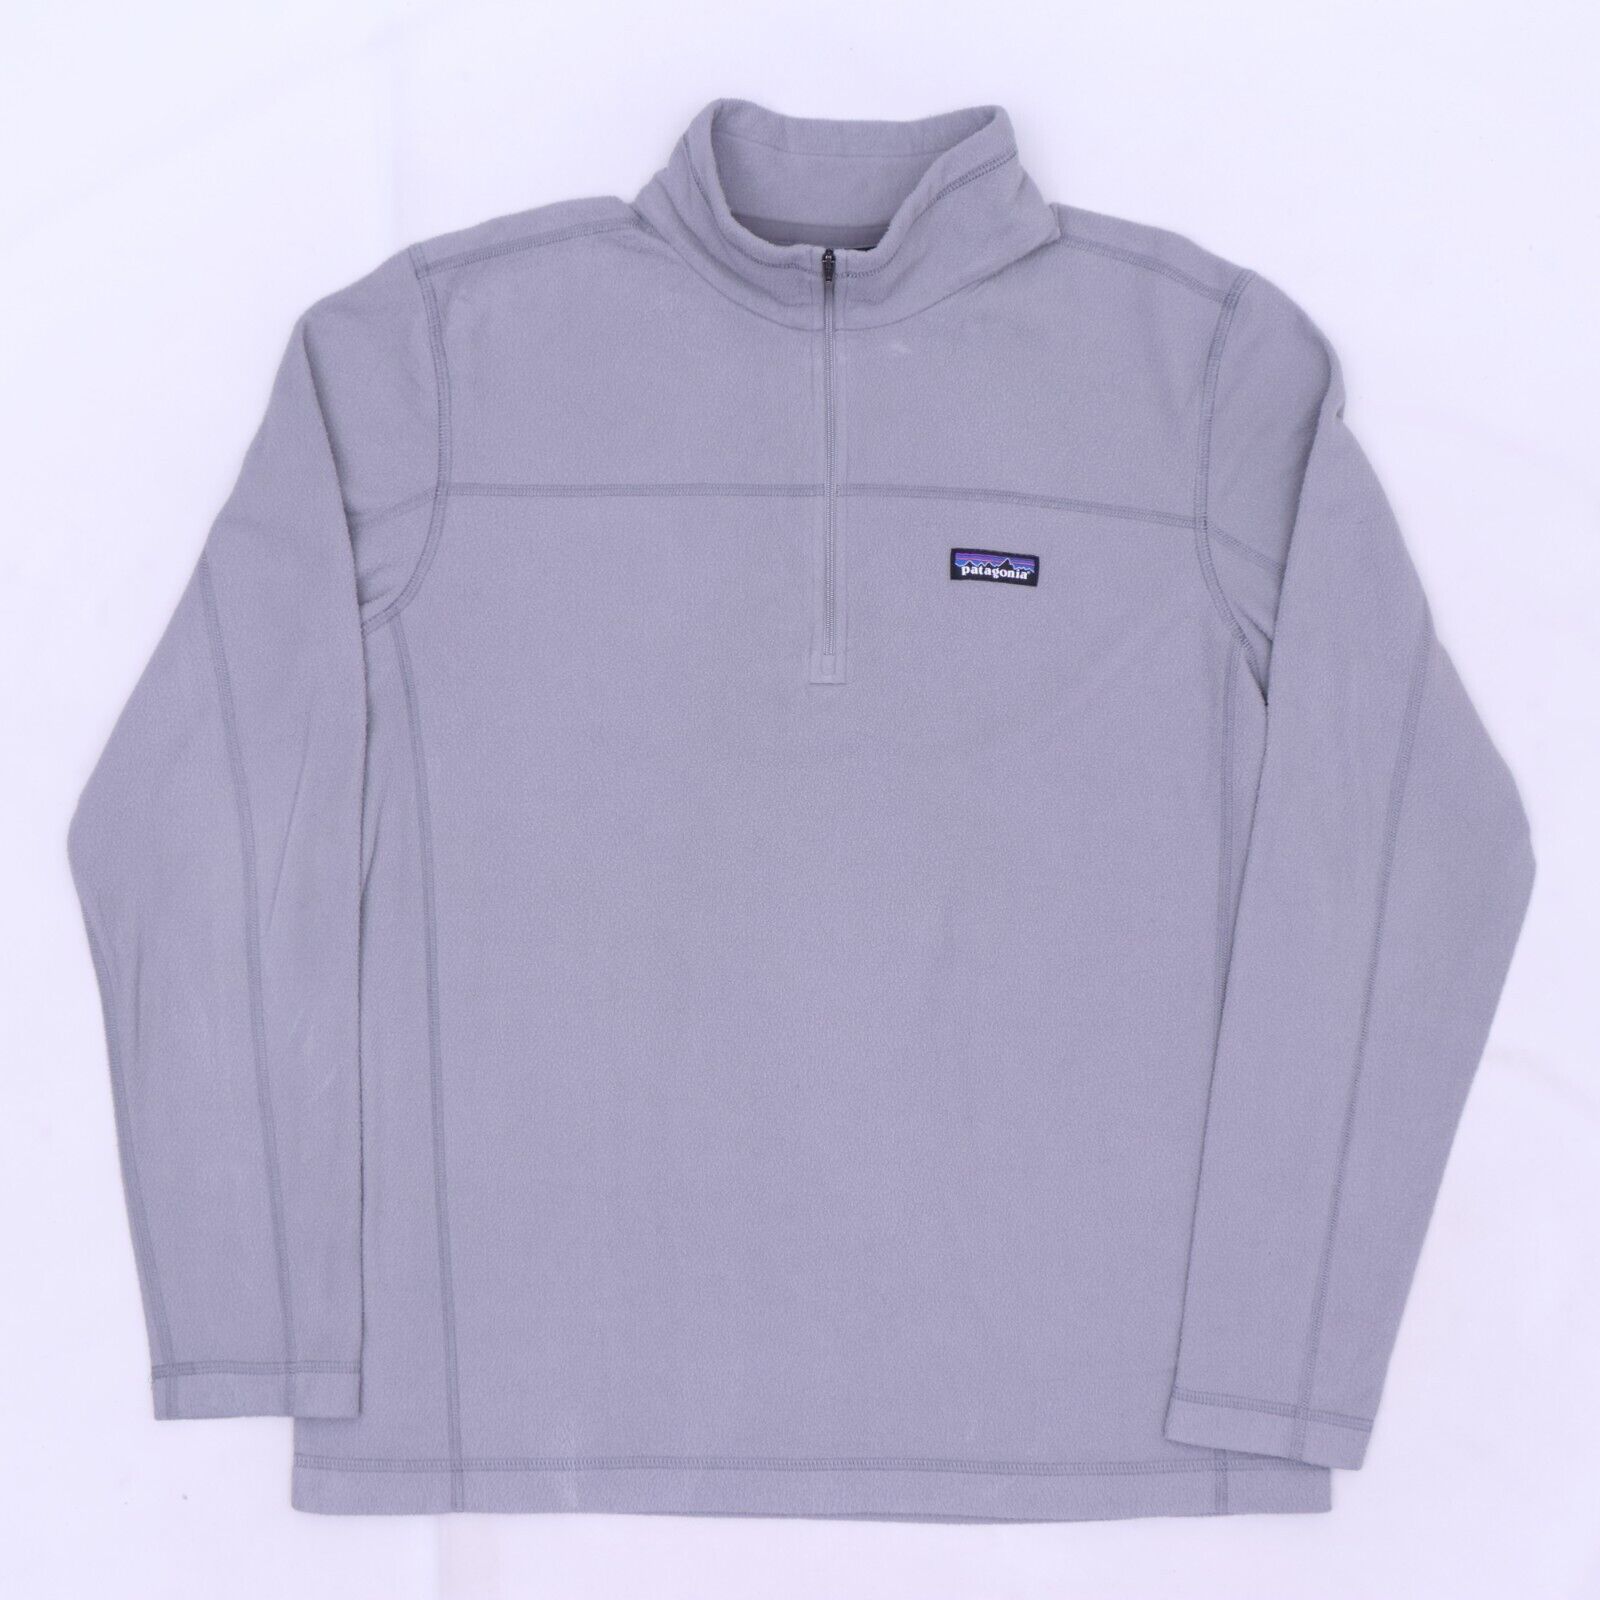 C5164 VTG Patagonia Men's Micro D Fleece 1/4 Zip Pullover Jacket Size L